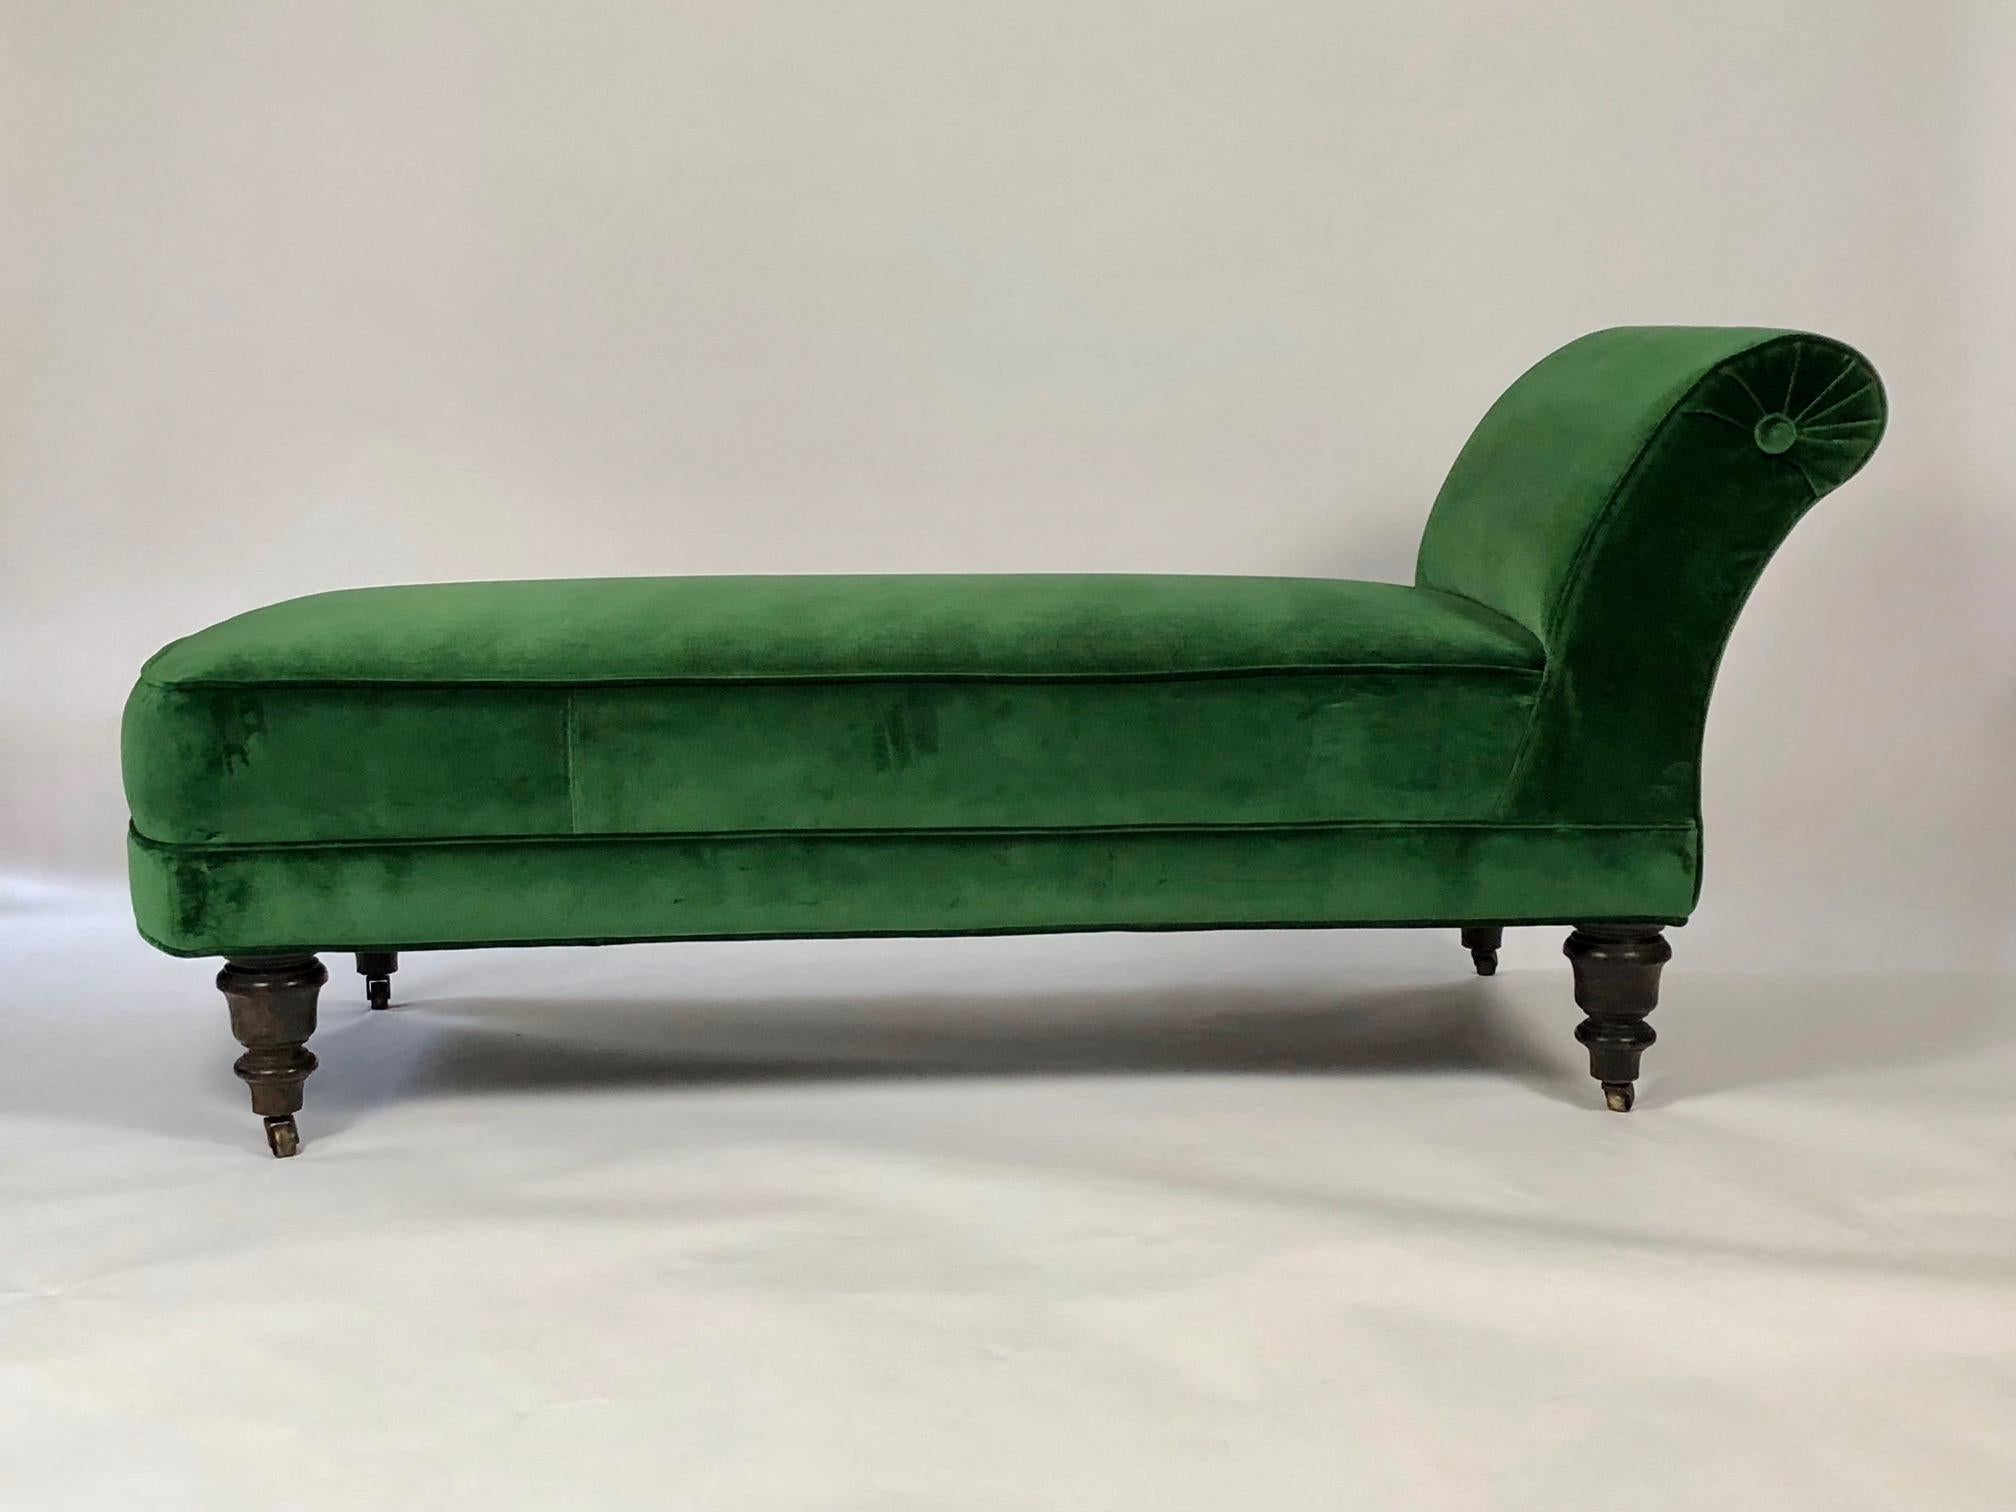 Victorian 19th Century Chaise Longue in Emerald Green Velvet